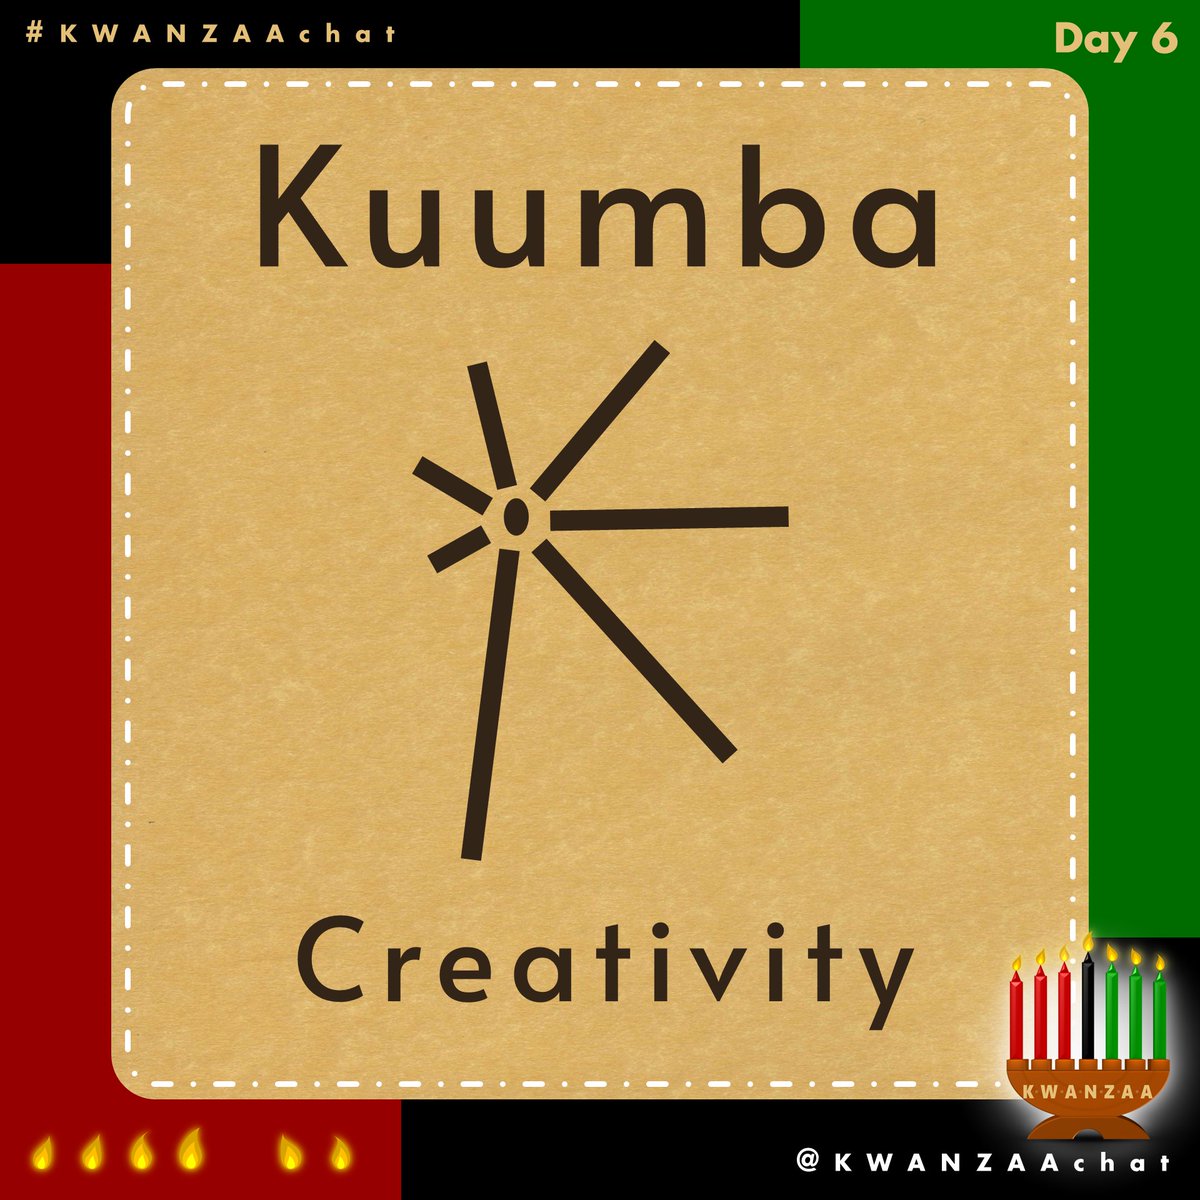 📣 :: The 6th day of Kwanzaa is Kuumba!
#Kuumba means #Creativity! ::
#KWANZAADay6
#Day6ofKWANZAA
#KWANZAA
#KWANZAAchat
#7Principles
#NguzoSaba
#Africana